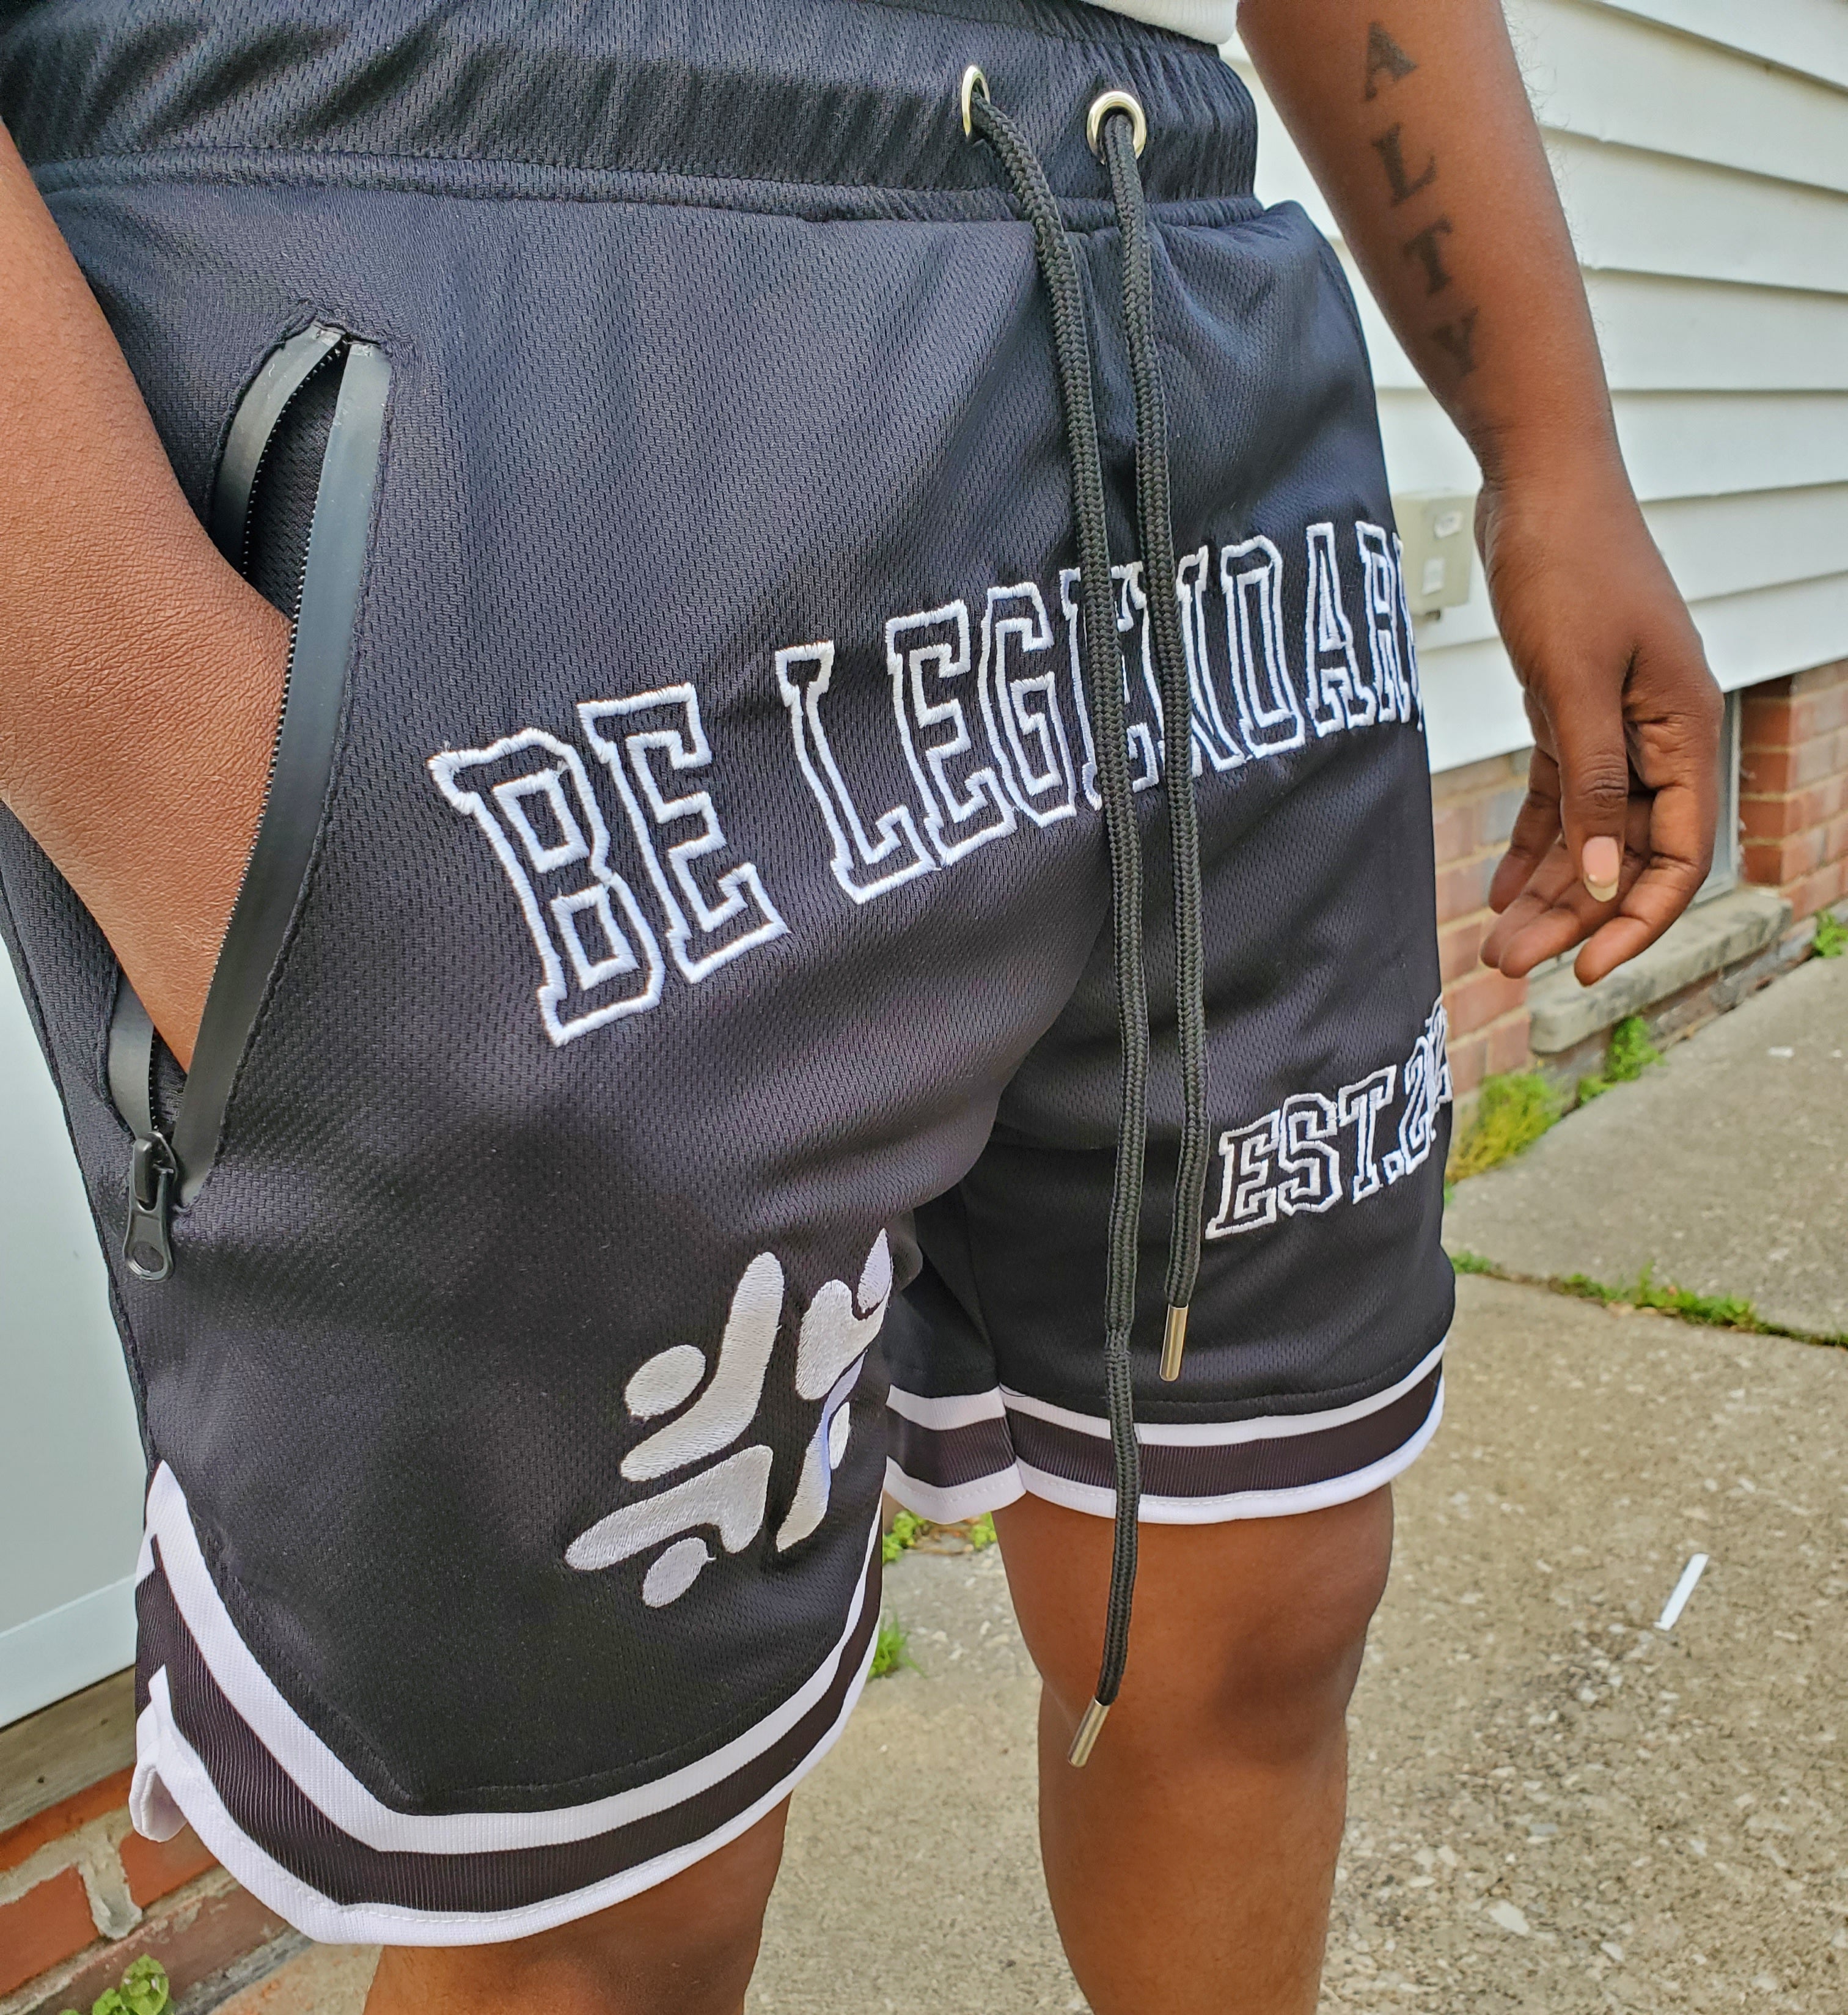 BMC Black "Be Legendary" Mesh Shorts - Black Mentality Clothing